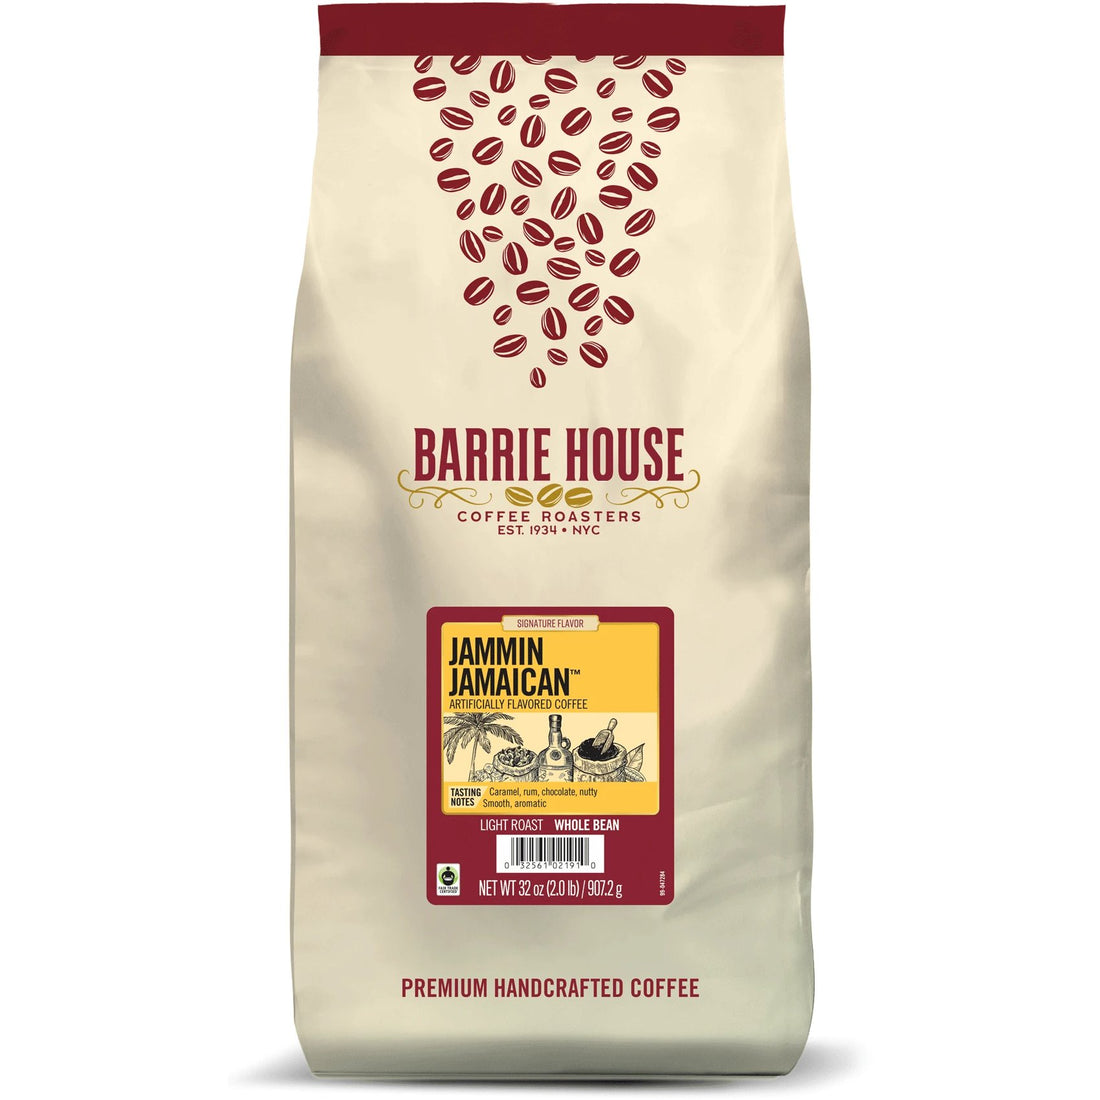 Barrie House Jammin Jamaican Fair Trade Organic Coffee 2lb